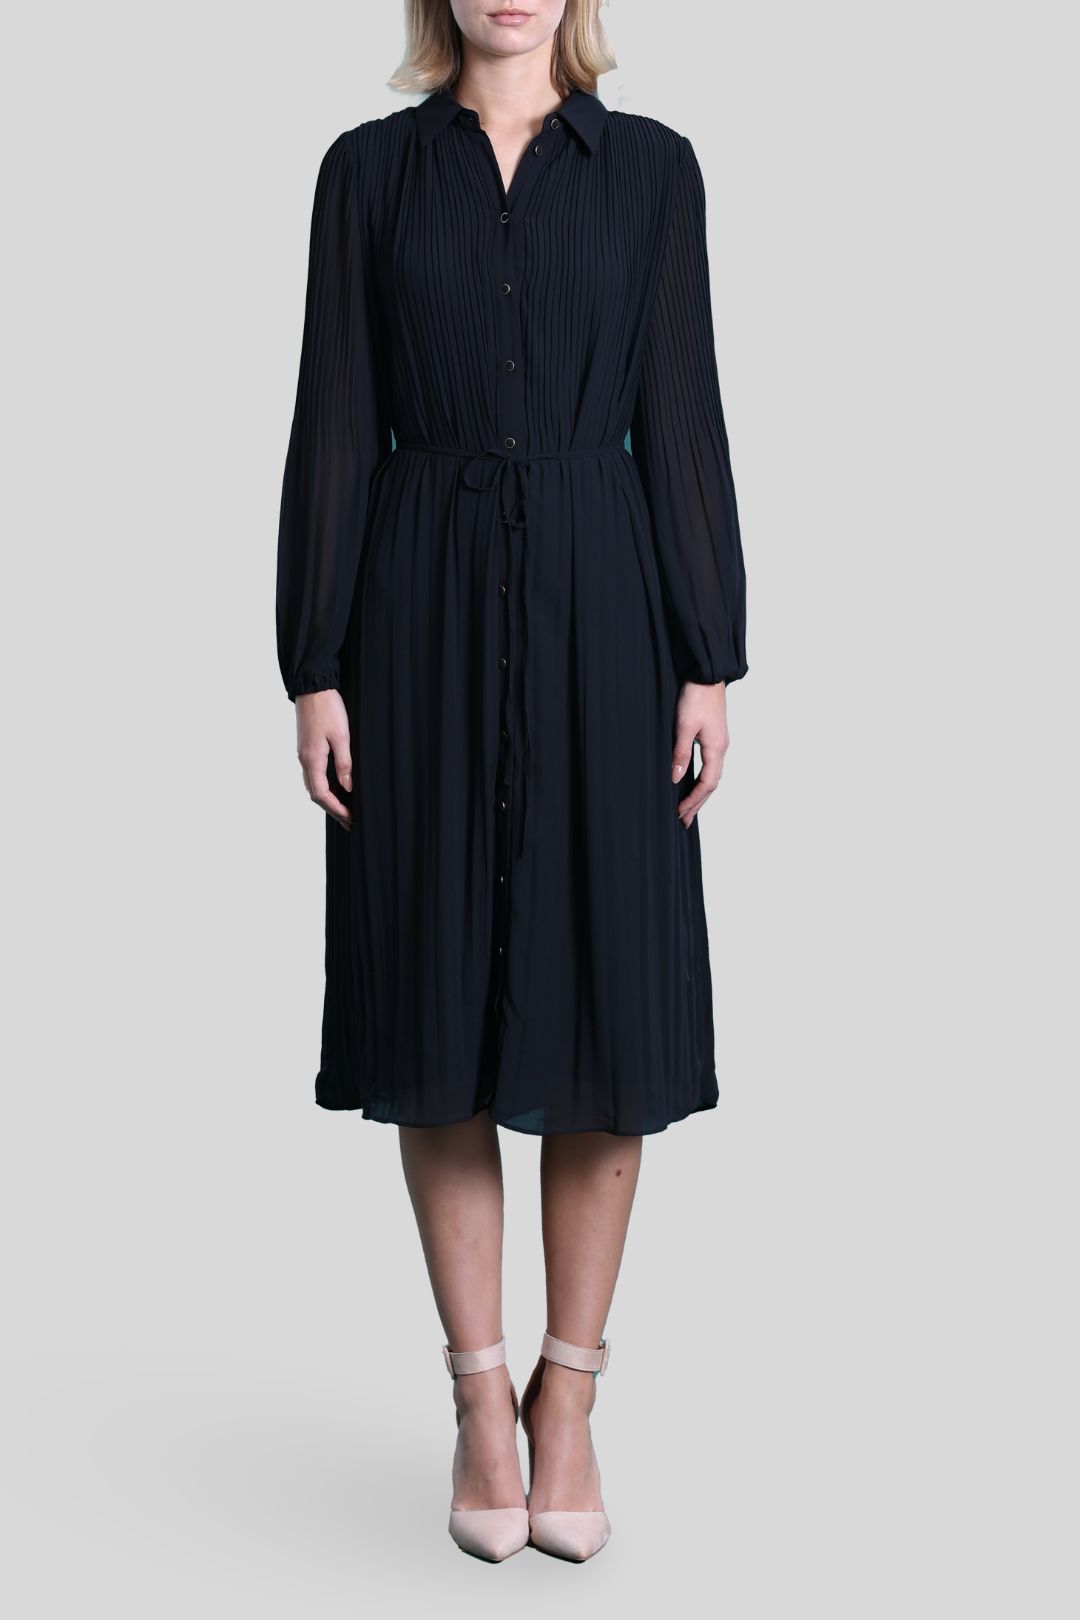 Portmans Black Pleated Puff Sleeve Shirt Dress